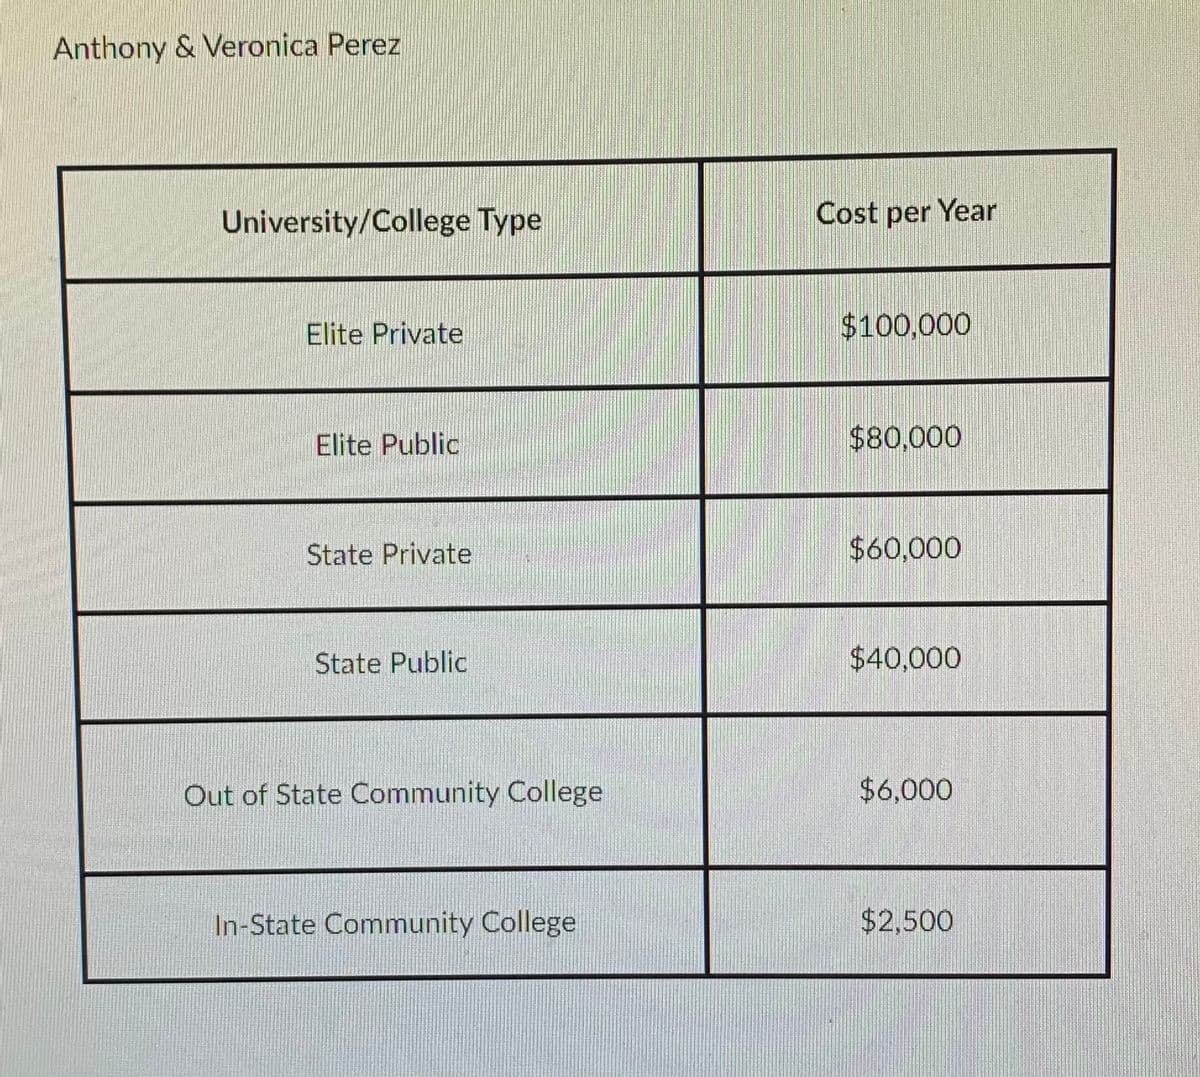 Anthony & Veronica Perez
University/College Type
Cost per Year
Elite Private
$100,000
Elite Public
$80,000
State Private
$60,000
State Public
$40,000
Out of State Community College
$6,000
In-State Community College
$2,500
